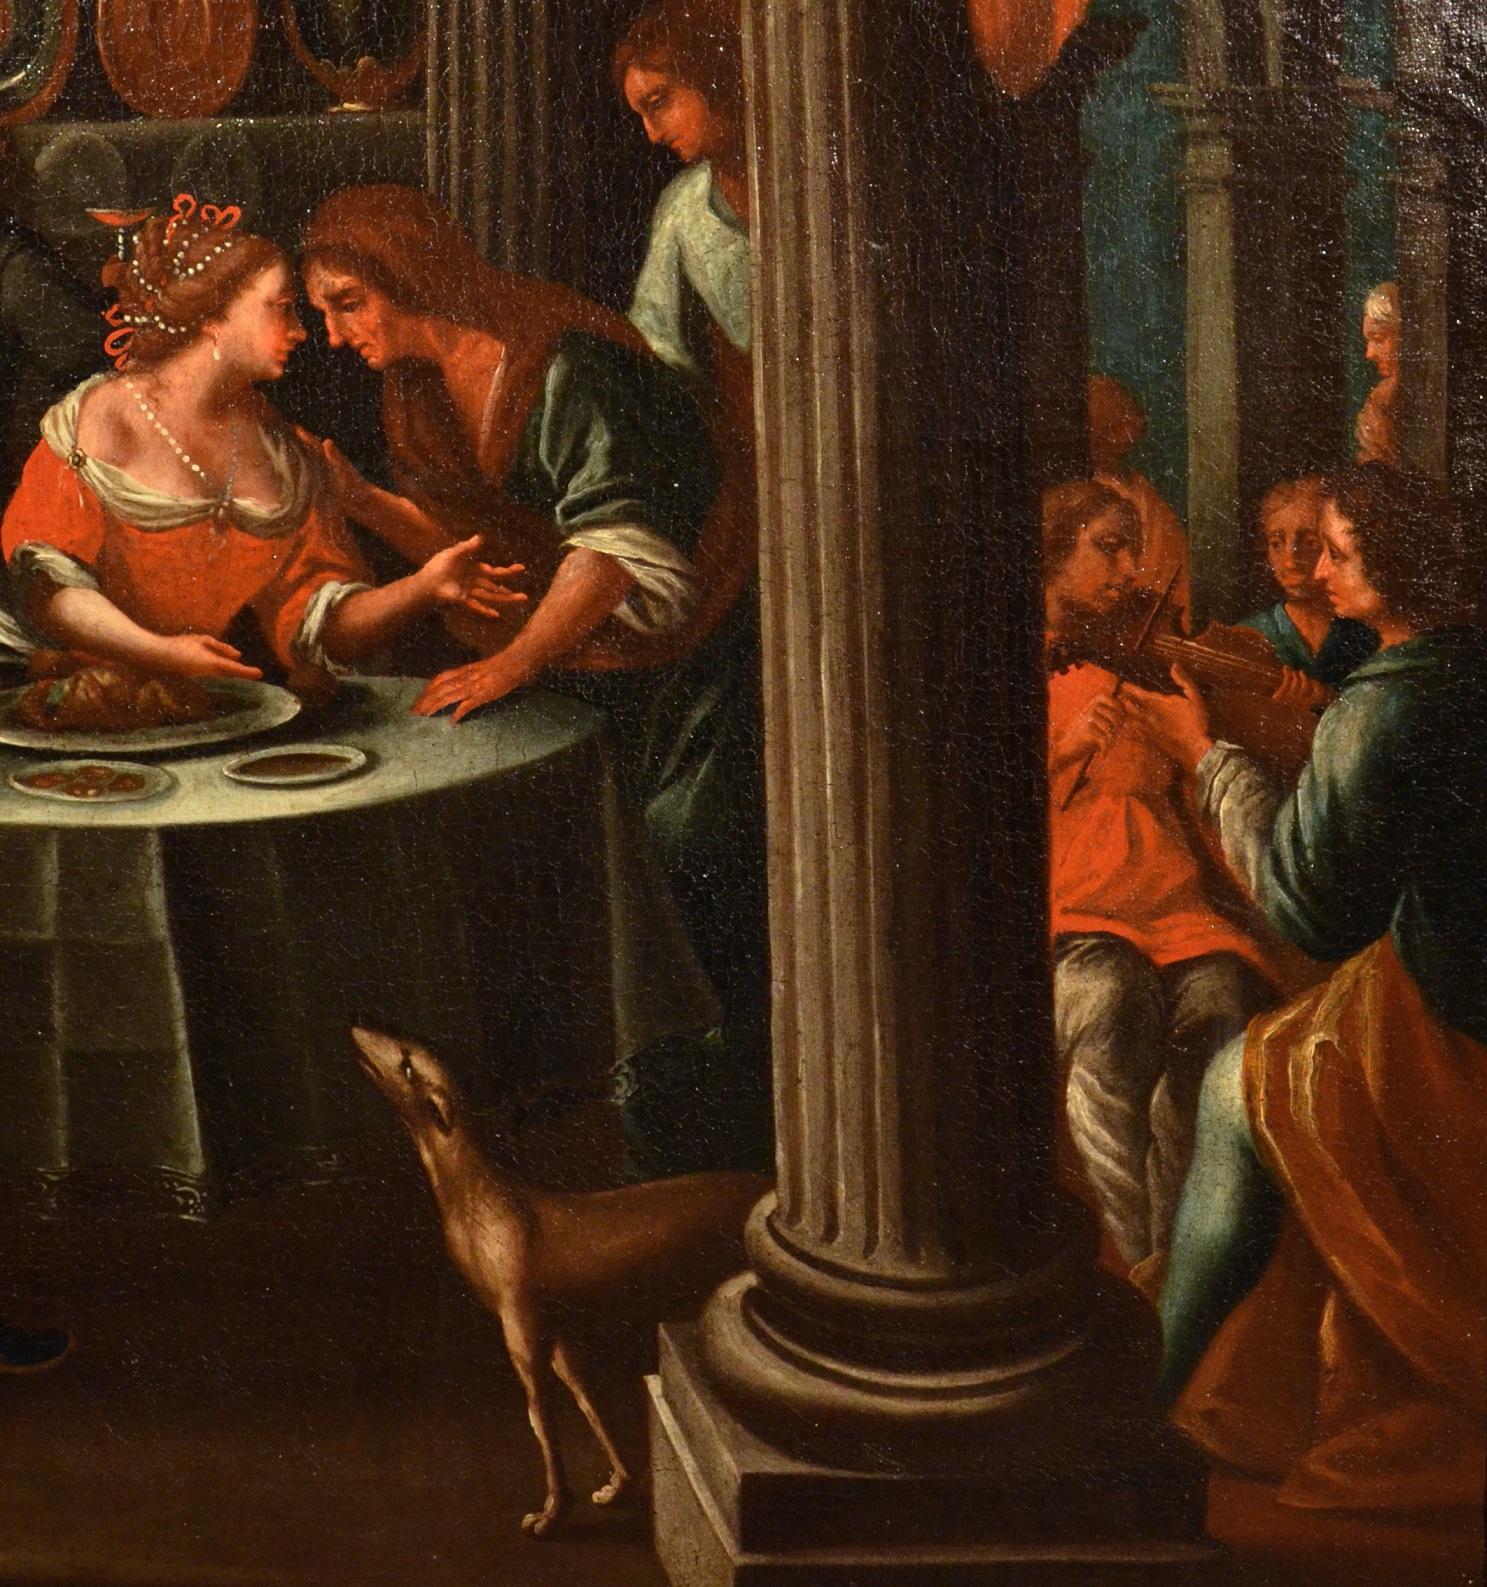 Banquet Flemish Italian Paint Oil on canvas Old master 17th Century Veronese Art en vente 6